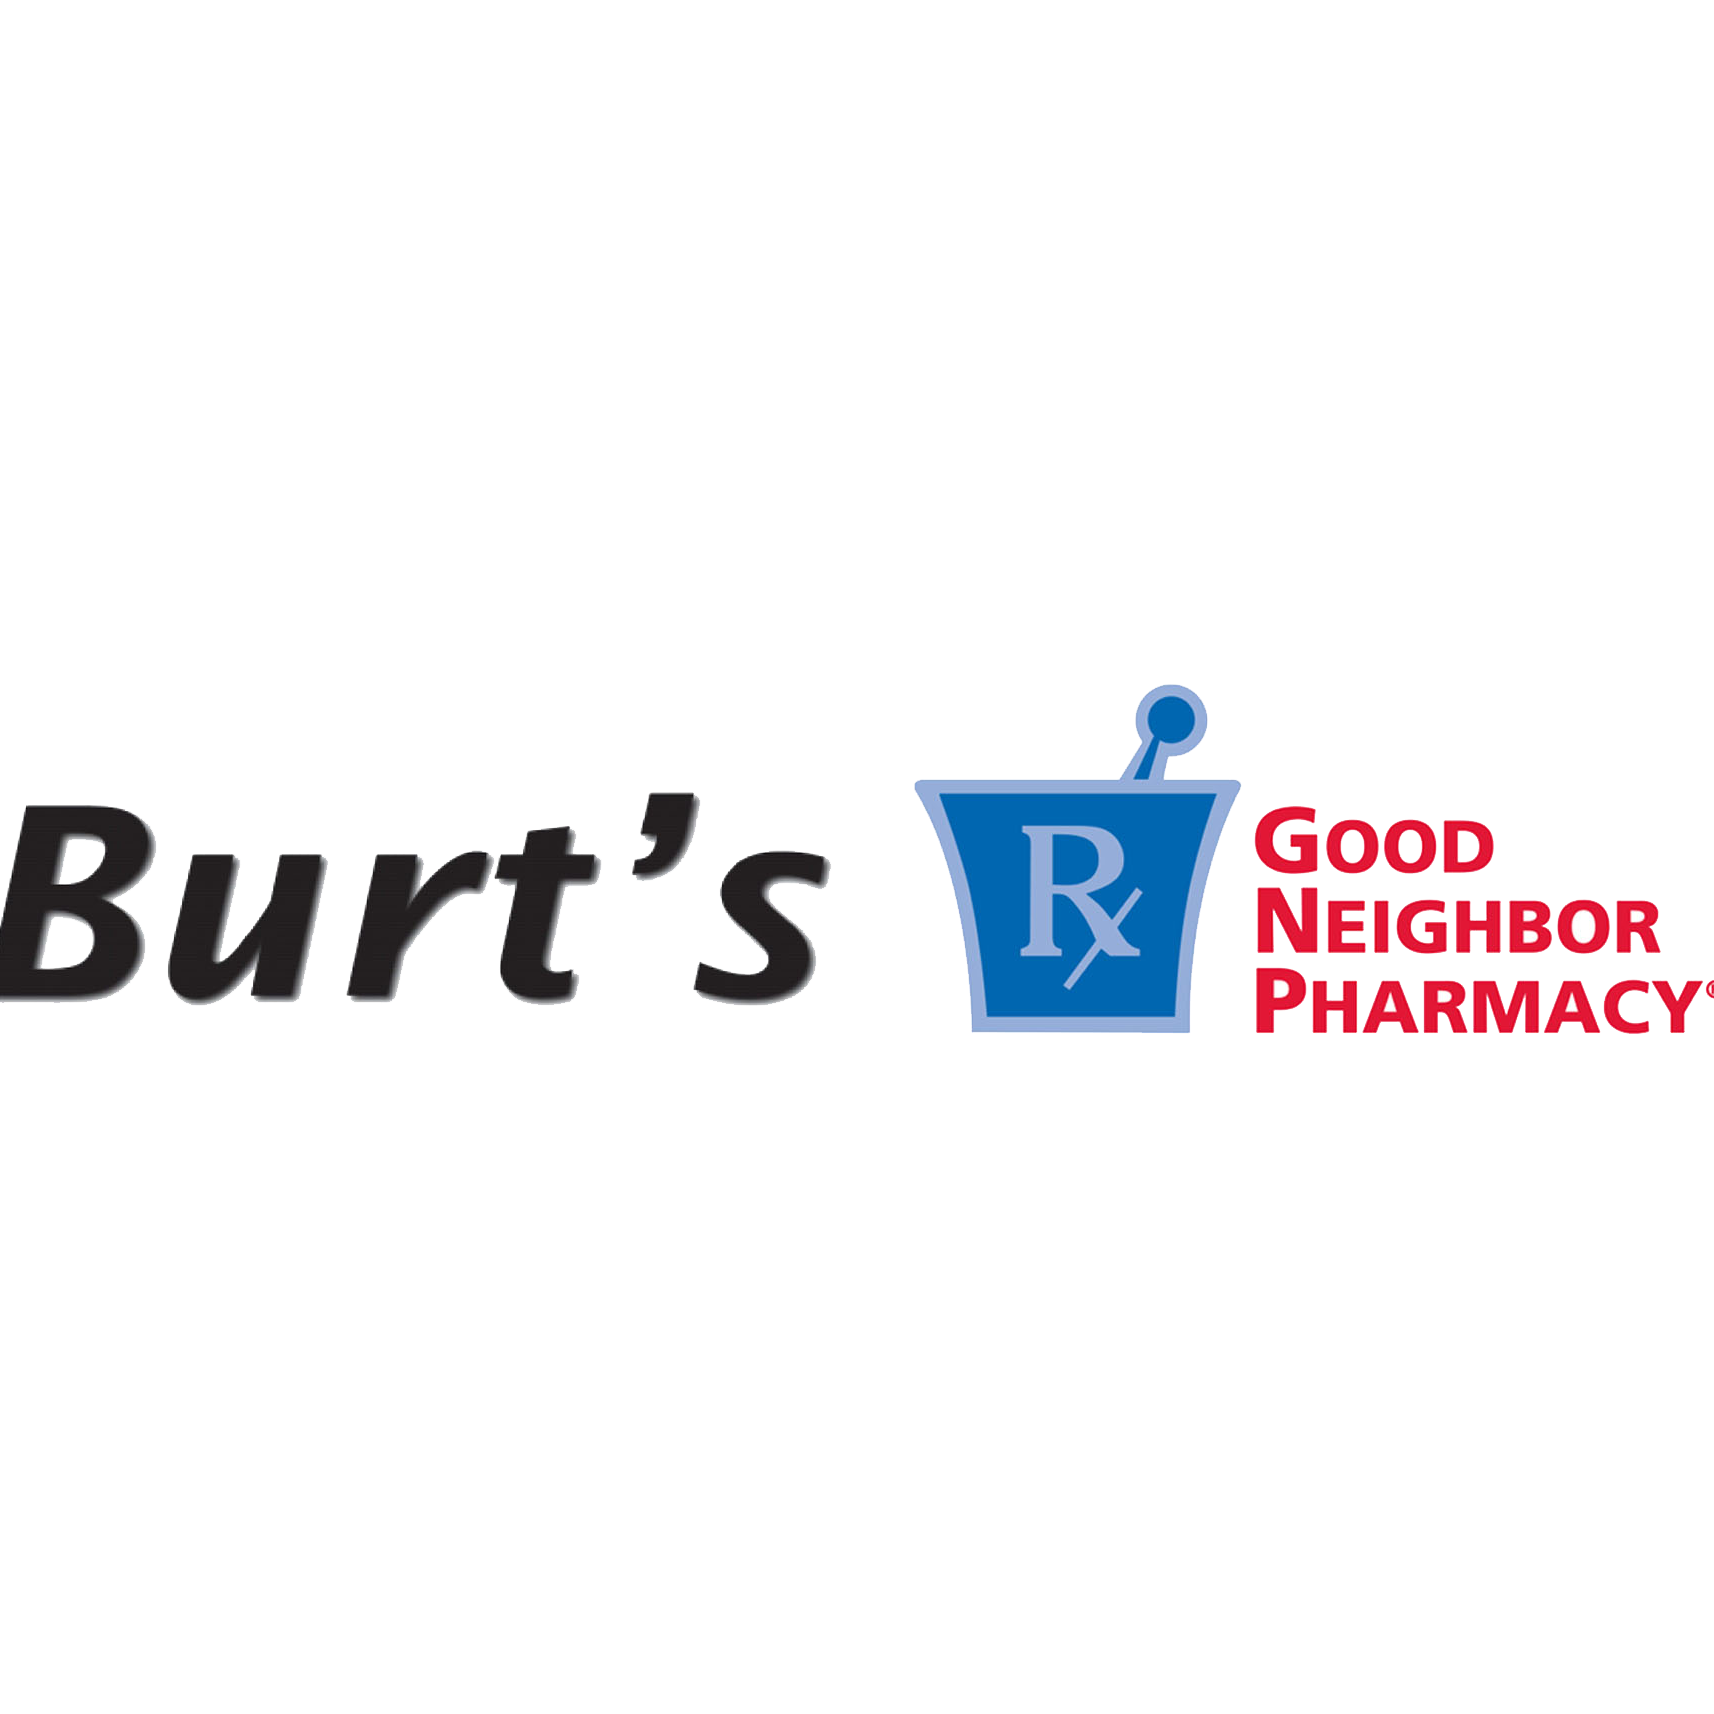 Burt's Pharmacy and Compounding Lab - Thousand Oaks - Thousand Oaks, CA 91360 - (805)413-5889 | ShowMeLocal.com